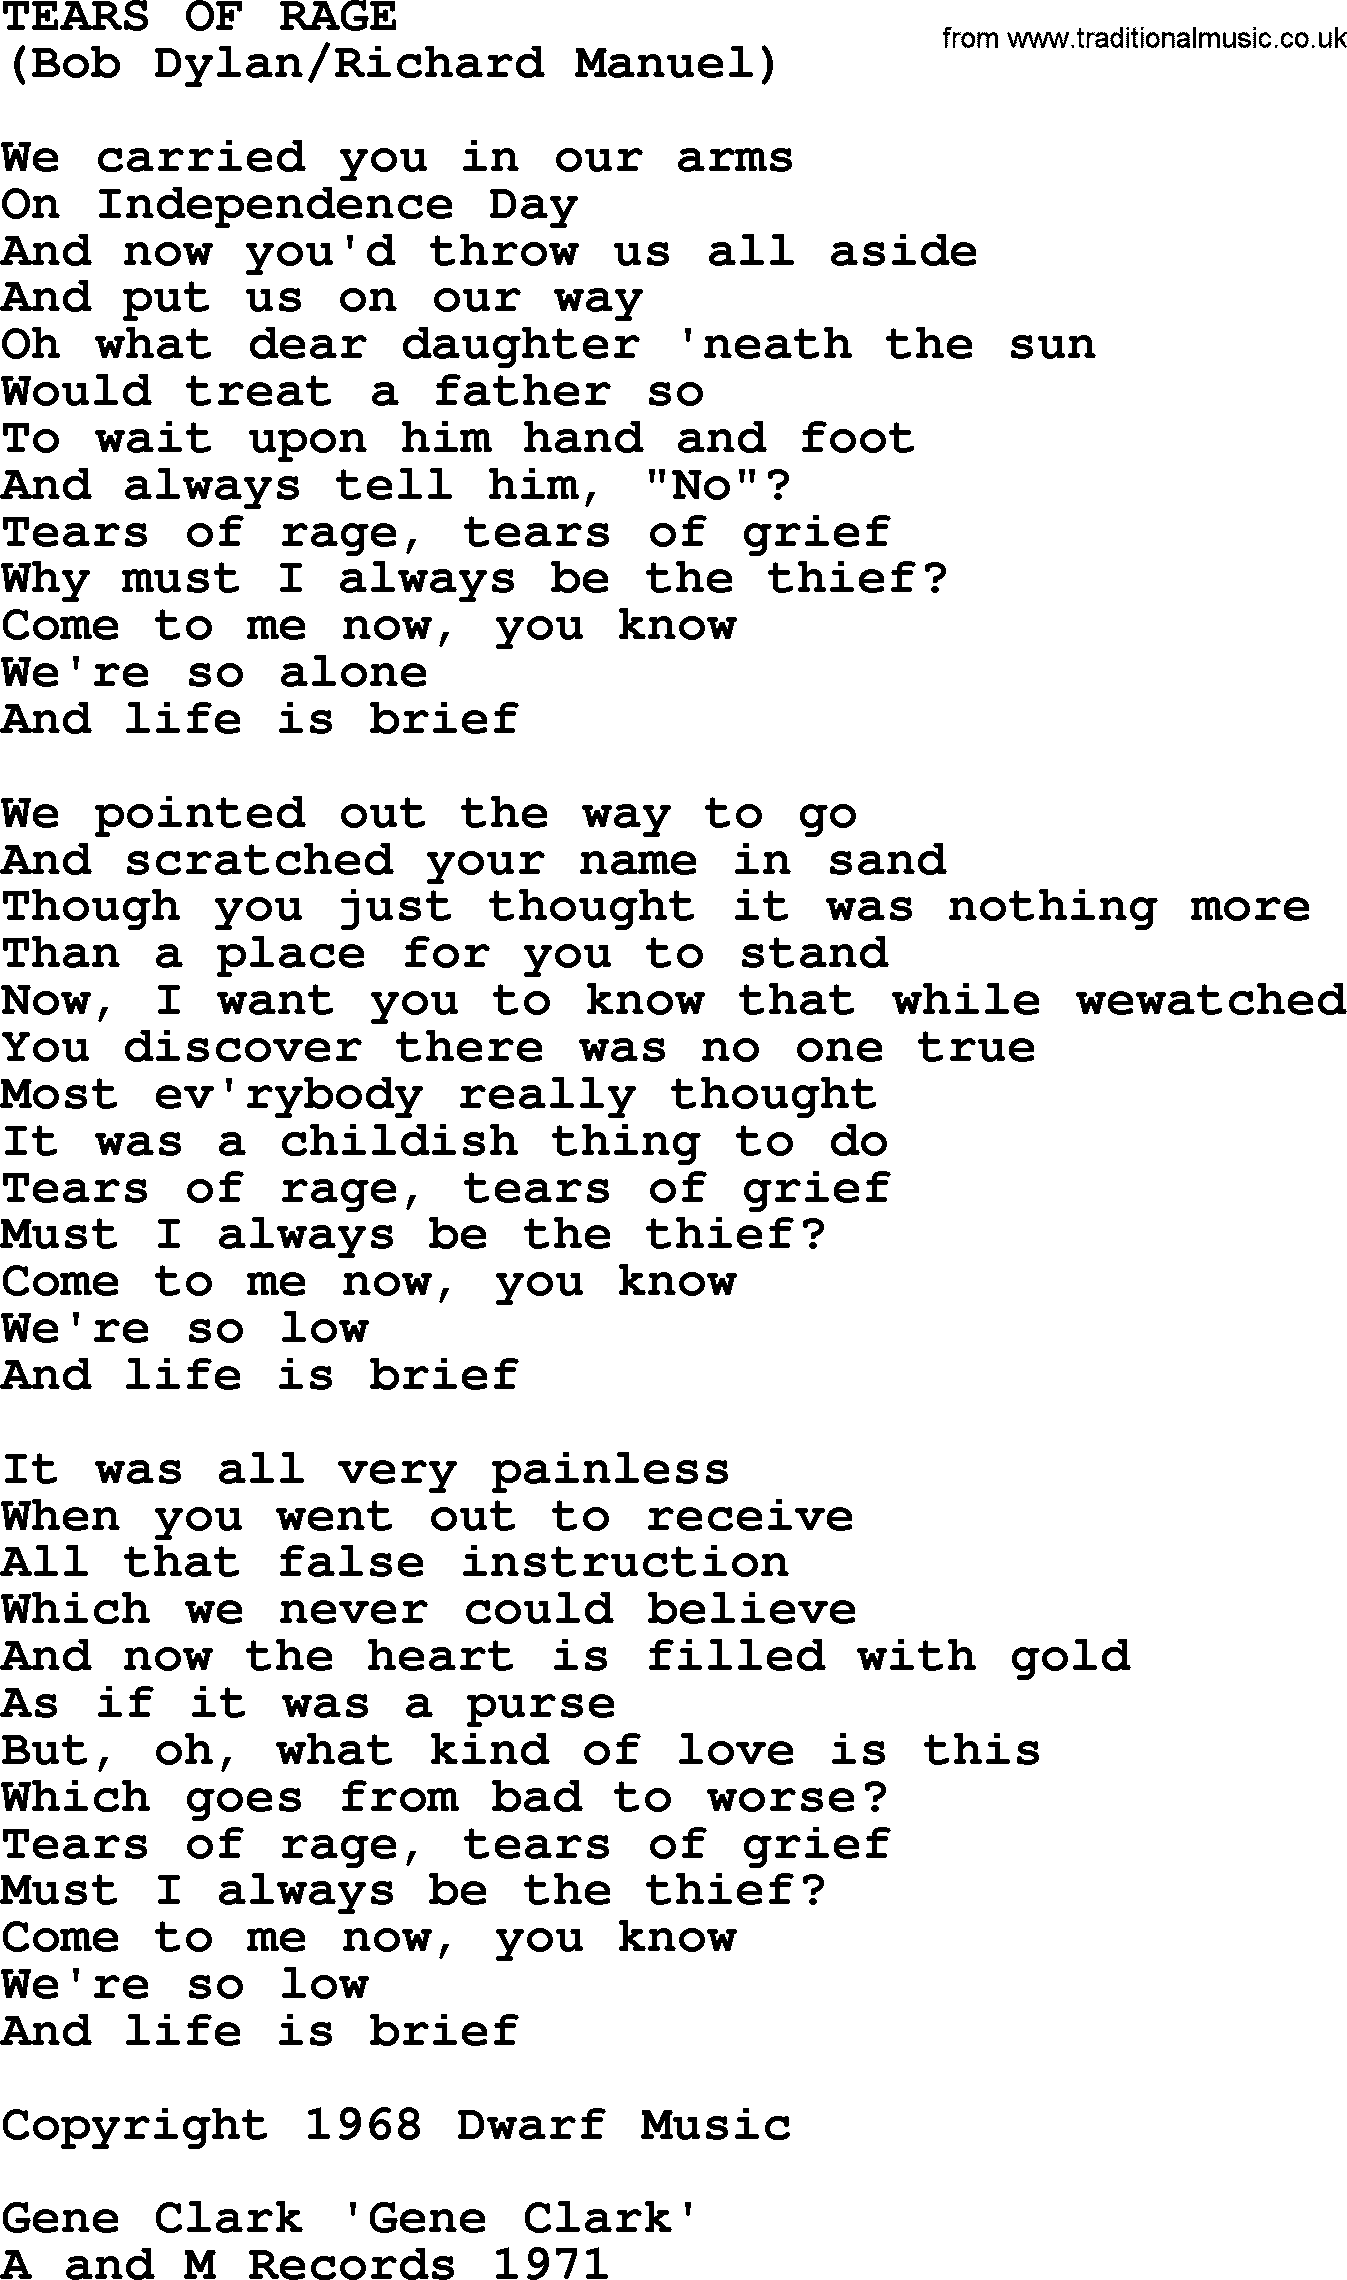 The Byrds song Tears Of Rage, lyrics